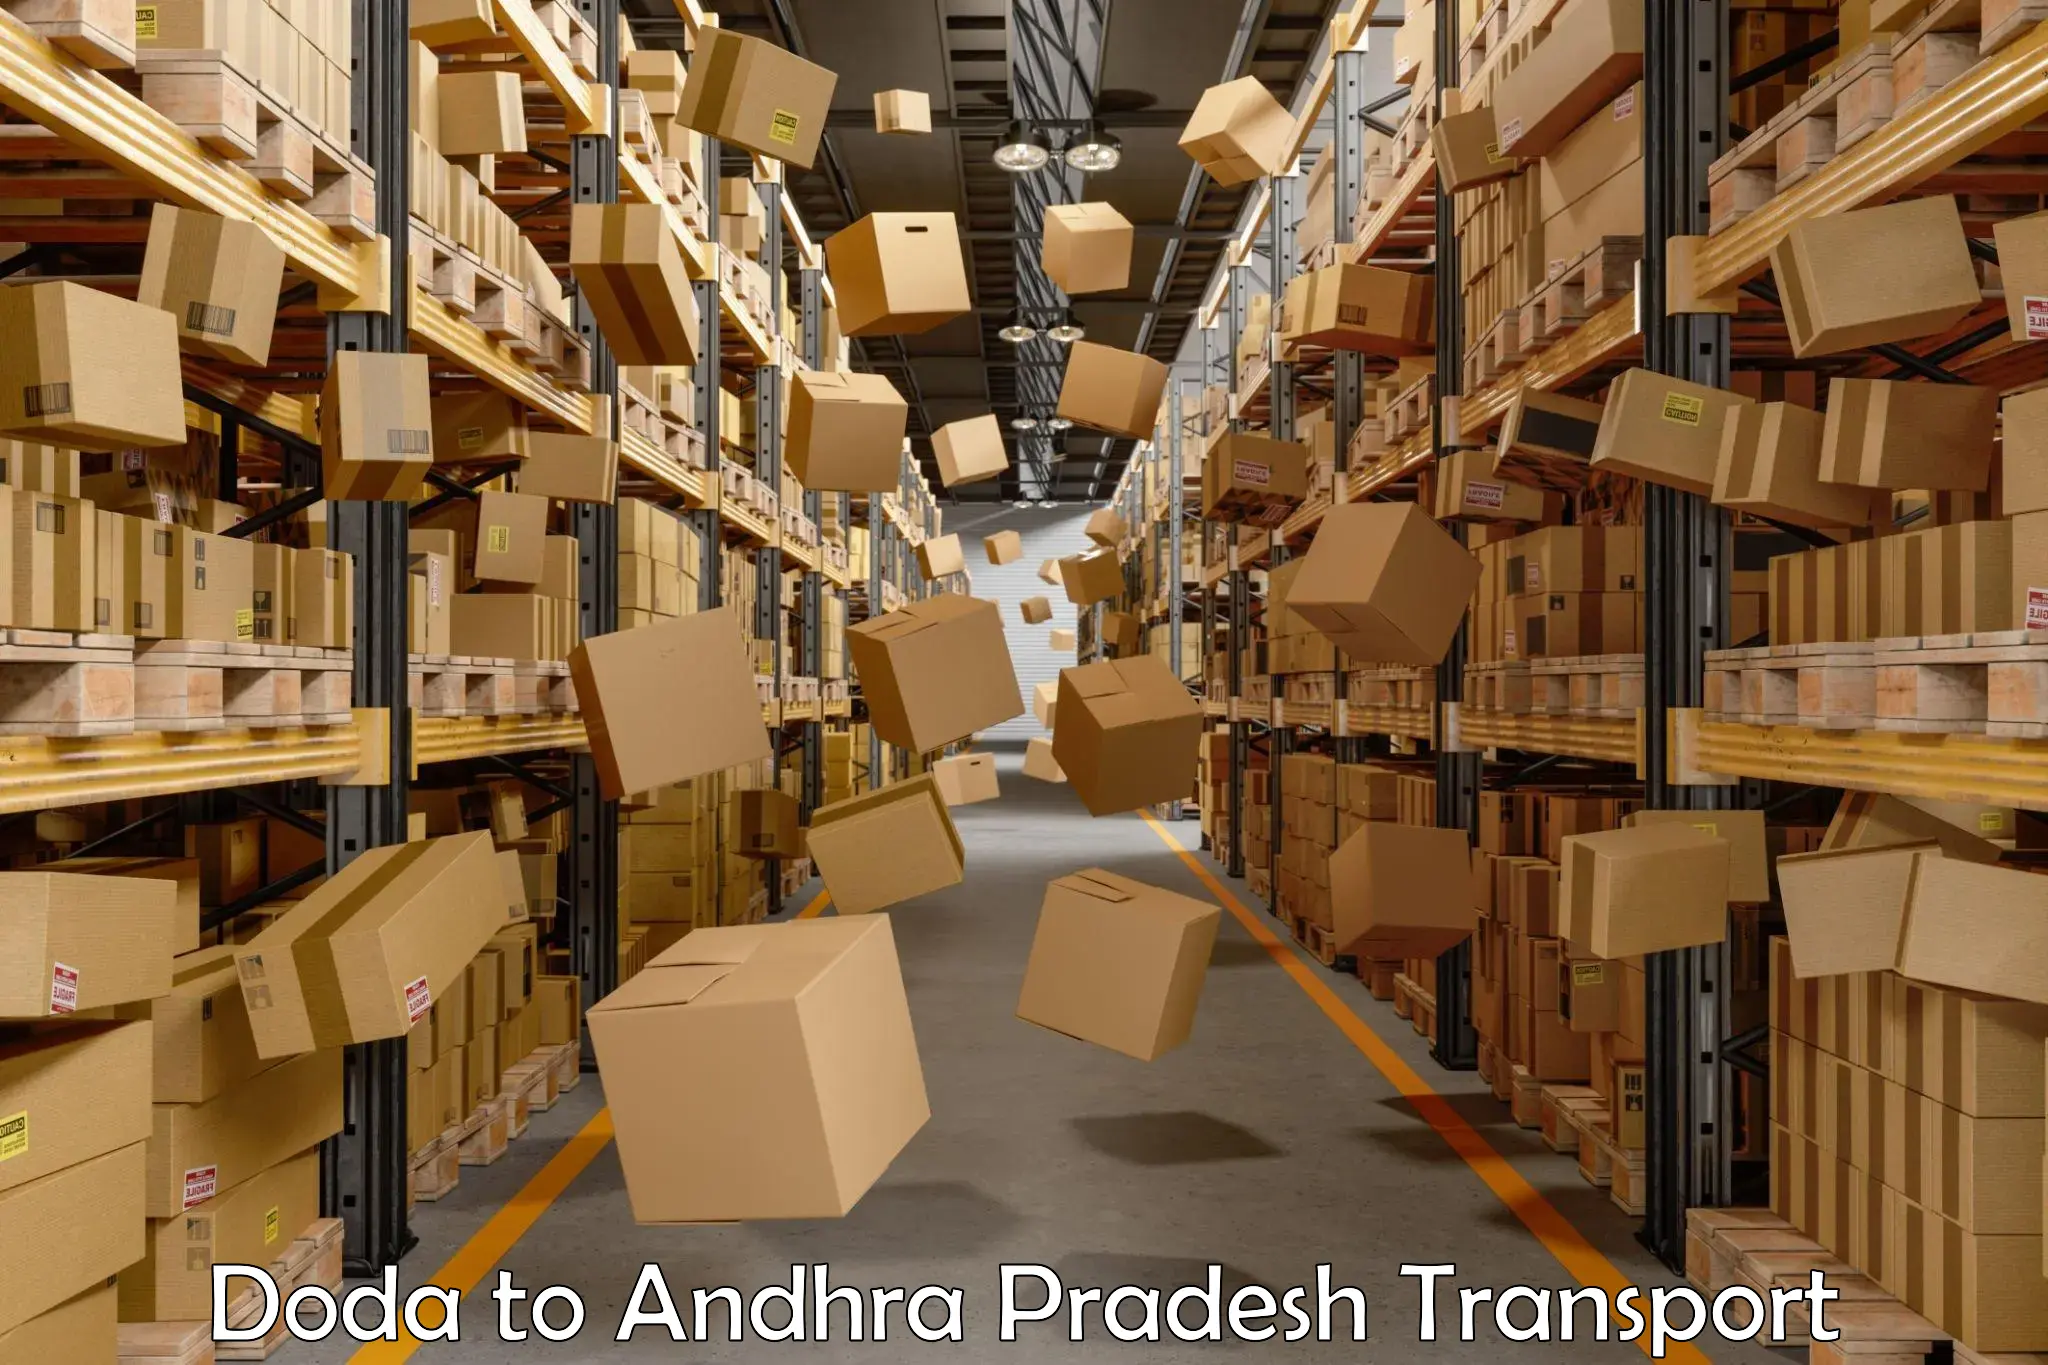 Truck transport companies in India Doda to Andhra Pradesh